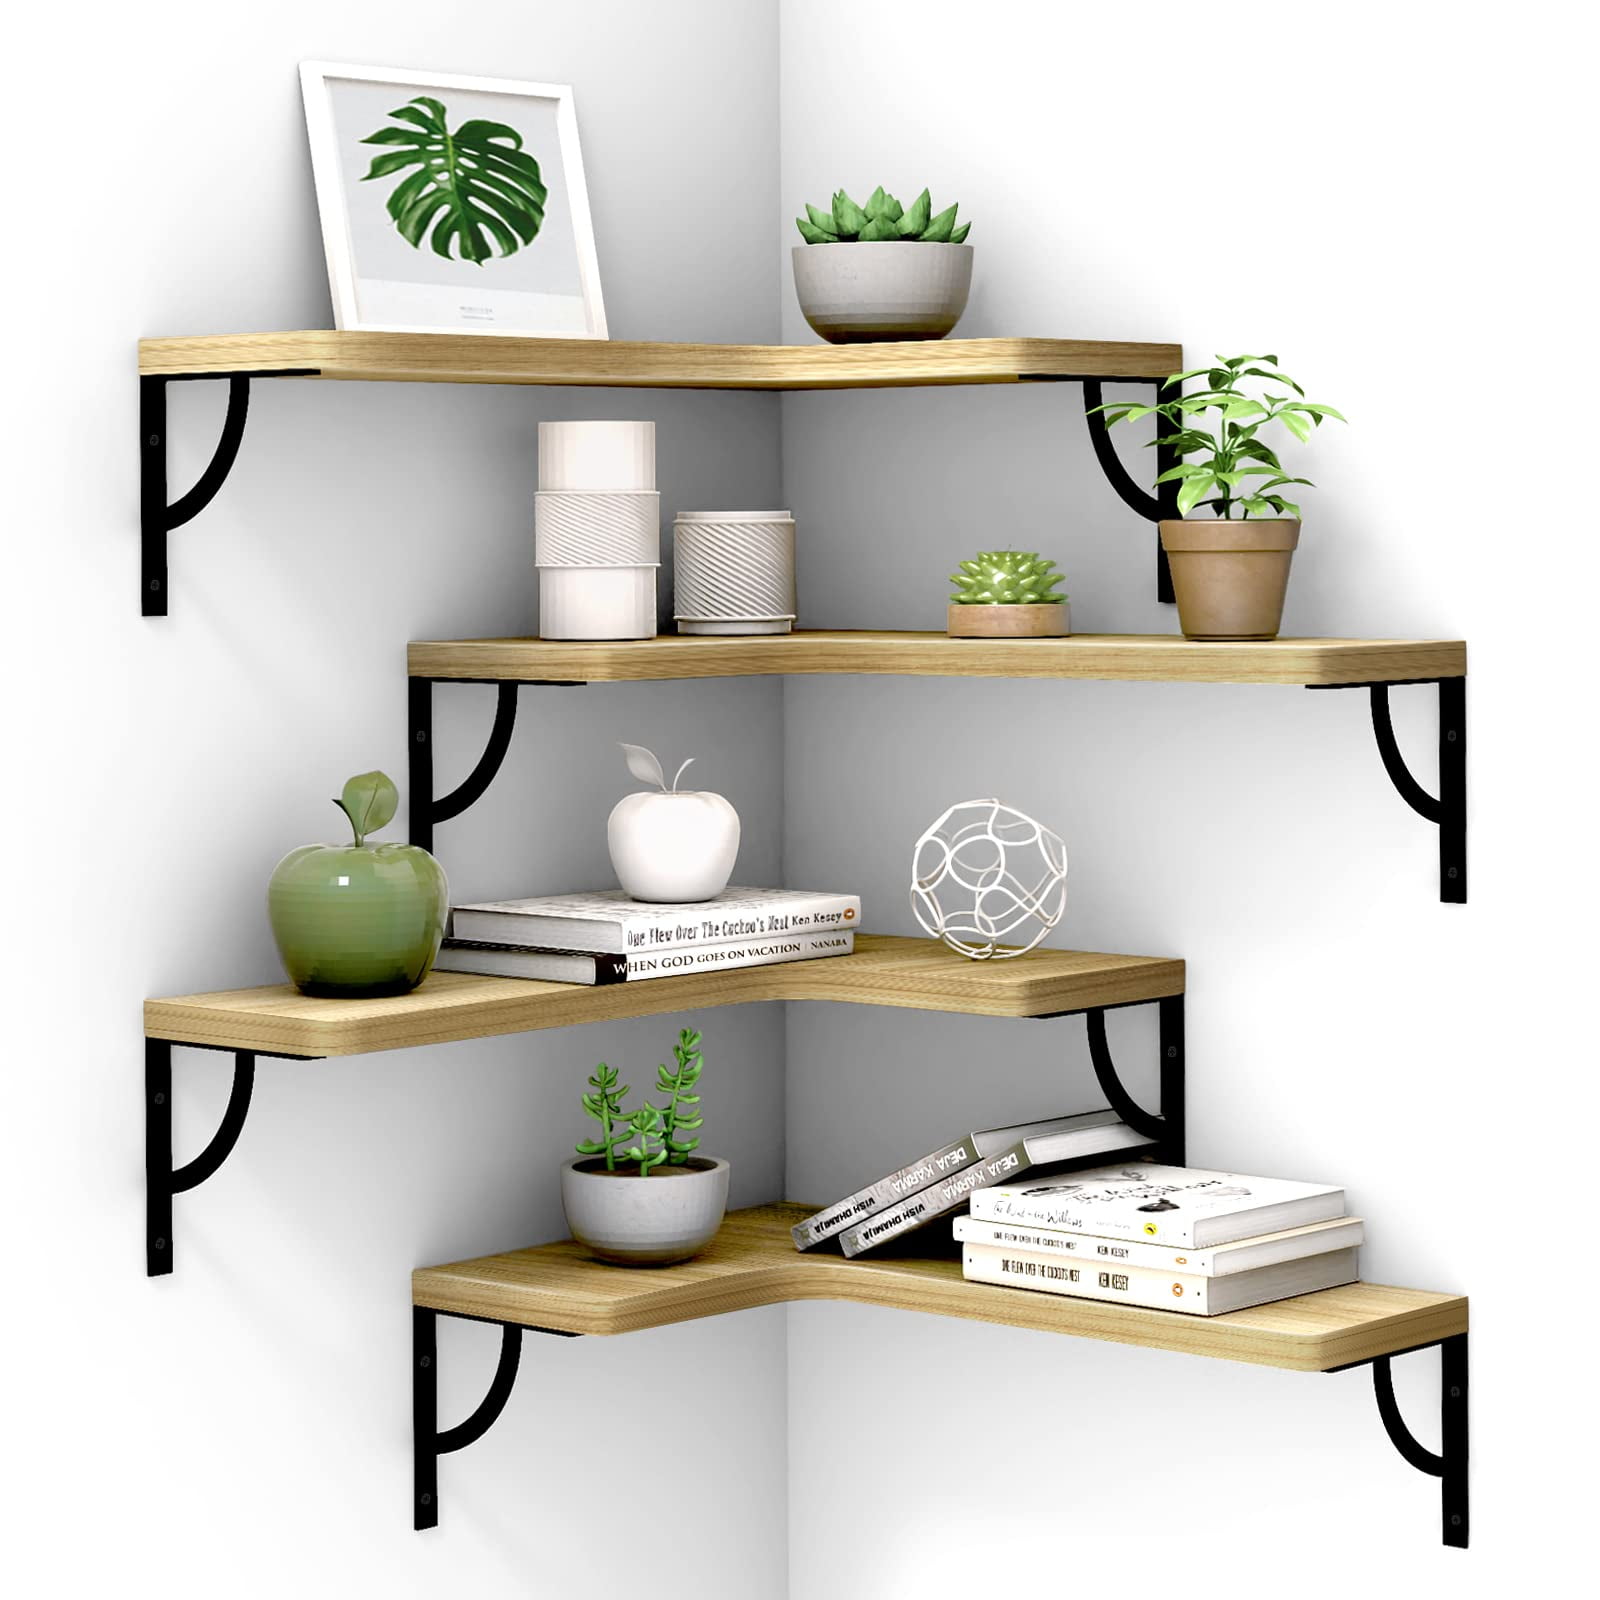 ROMGUAR Craft Corner Floating Shelves Wall Mounted Shelves Set of 4, Waterproof Wood Display Wall Storage Shelves, Book Shelves, Home Decor for